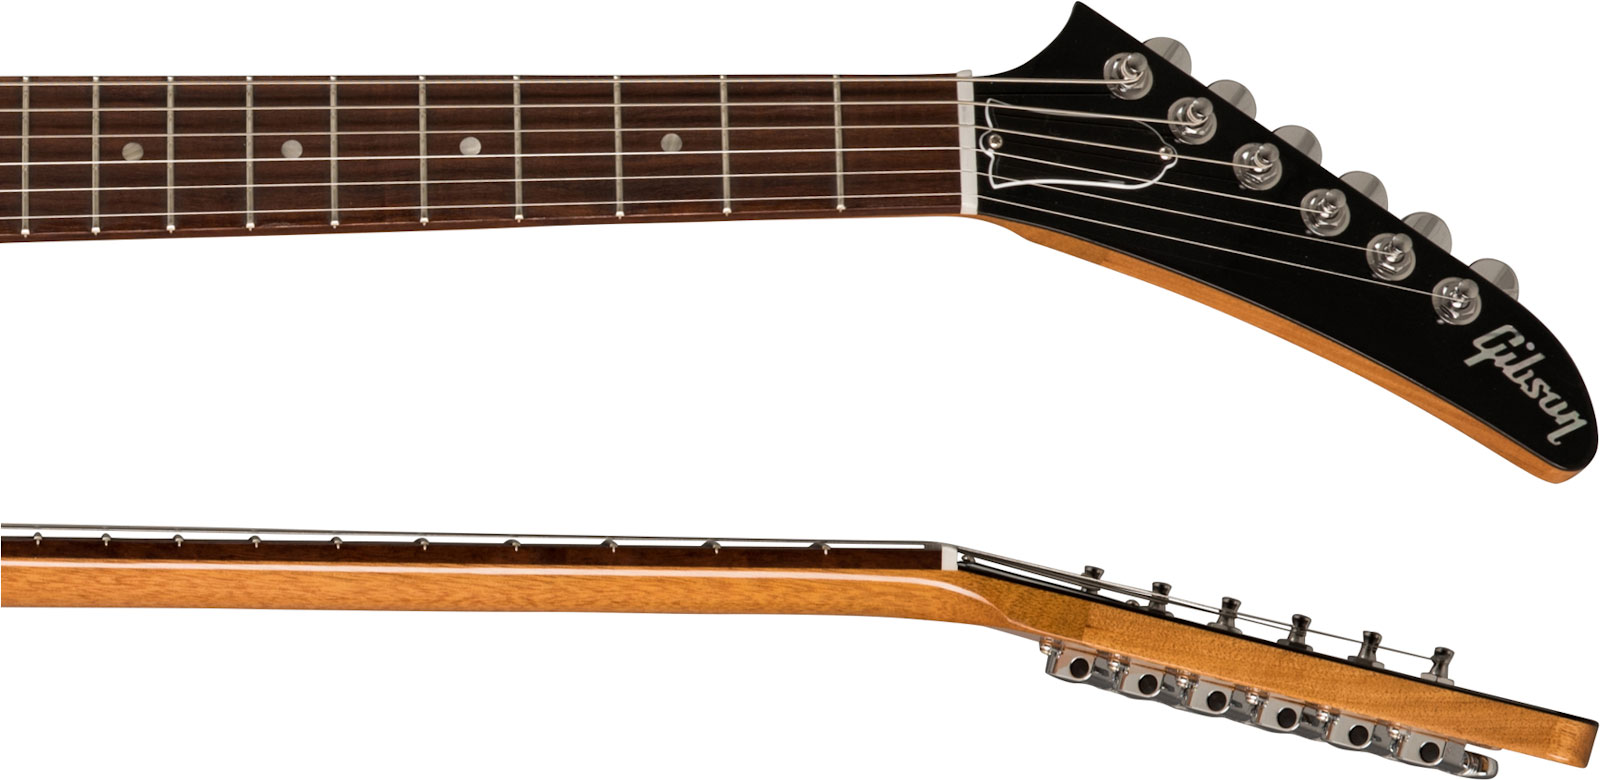 Gibson Explorer Original 2h Ht Rw - Antique Natural - Retro rock electric guitar - Variation 3